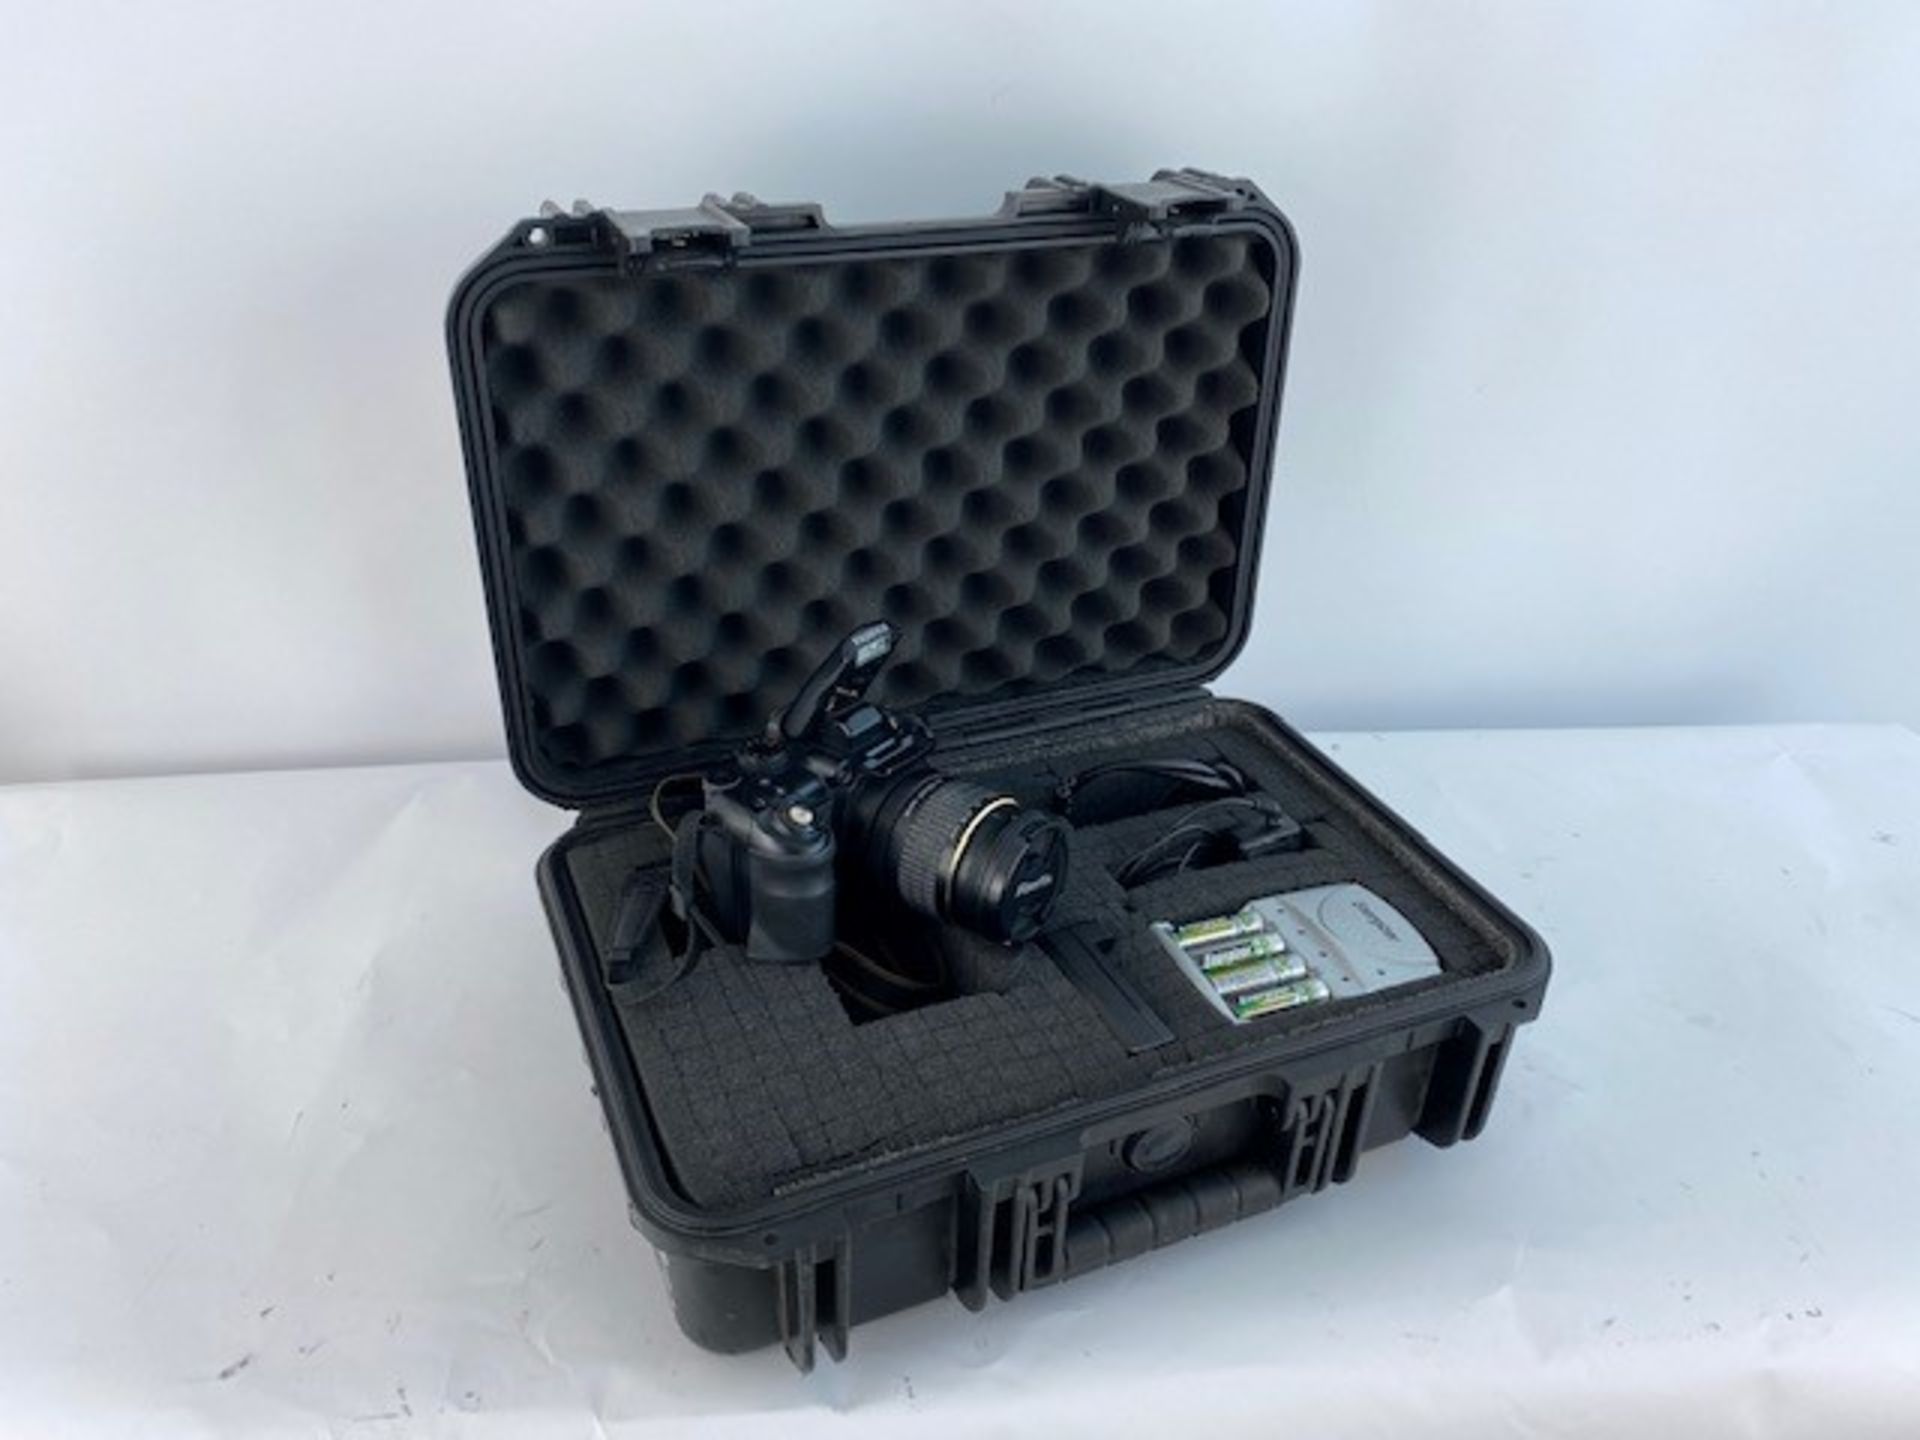 1 x Fuji FinePix S9600 Digital Camera With PSU In SKB Flight Case - Ref: 132 - CL581 - Location: